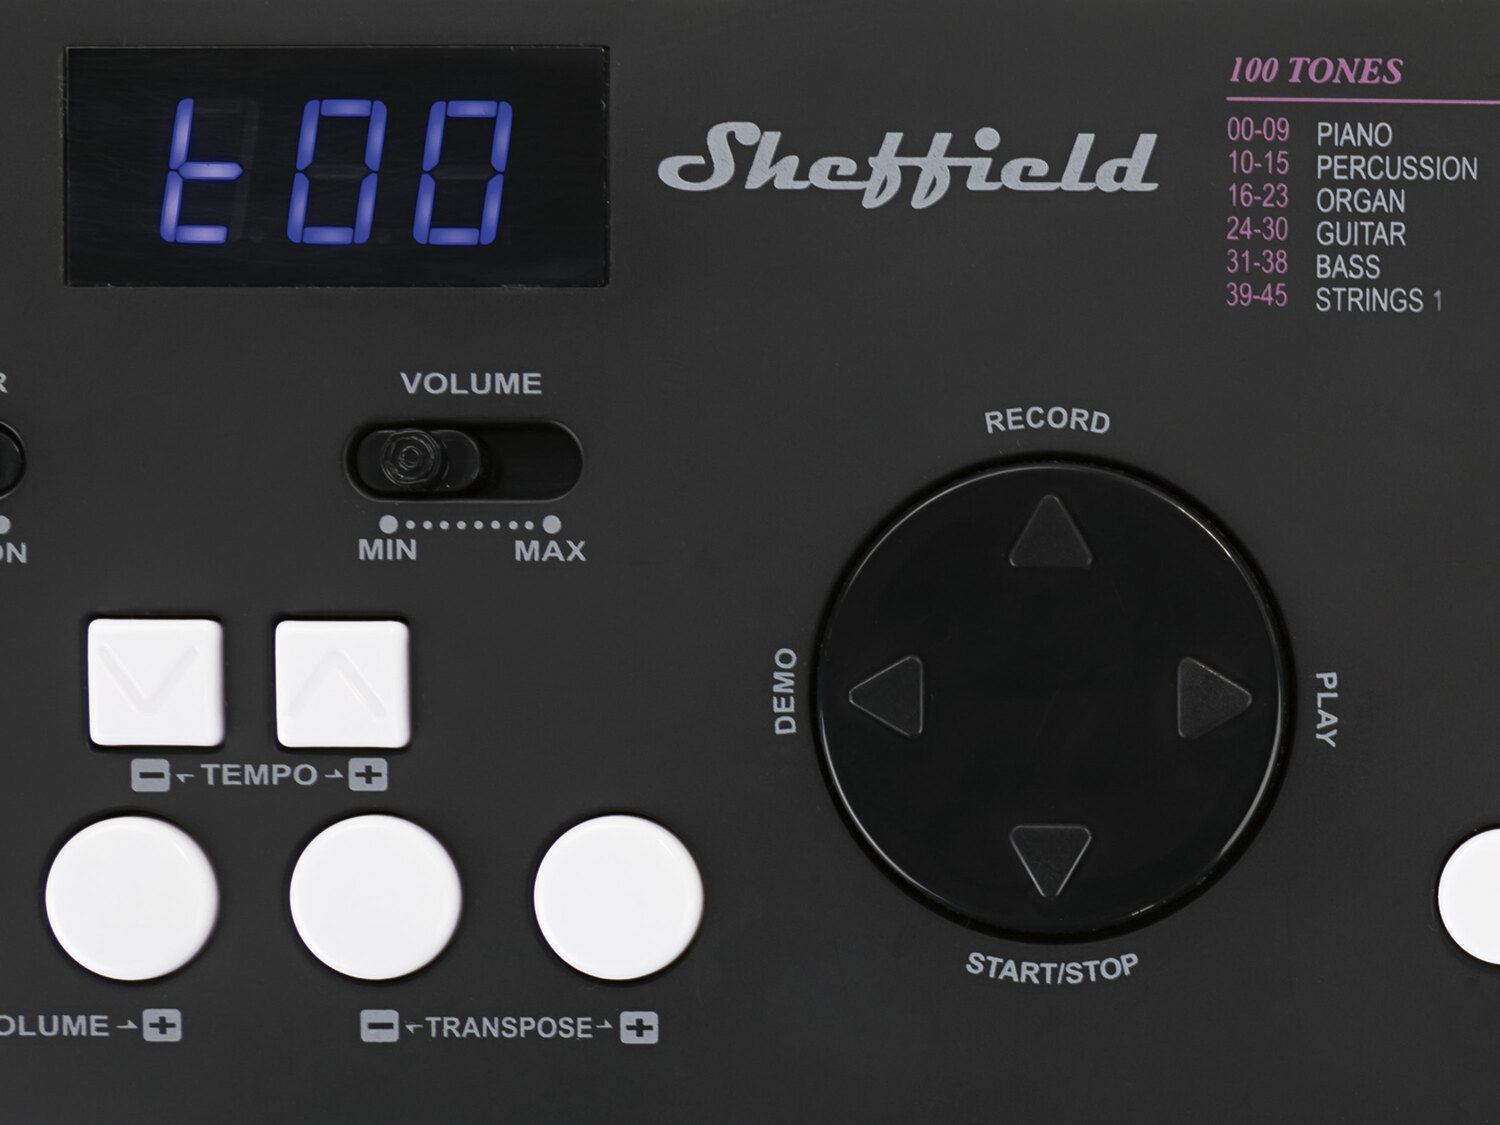 Keyboard Sheffield, cena 89,90 PLN 
2 kolory 
- efekty: sustain (dźwięk) i vibrato
- ...